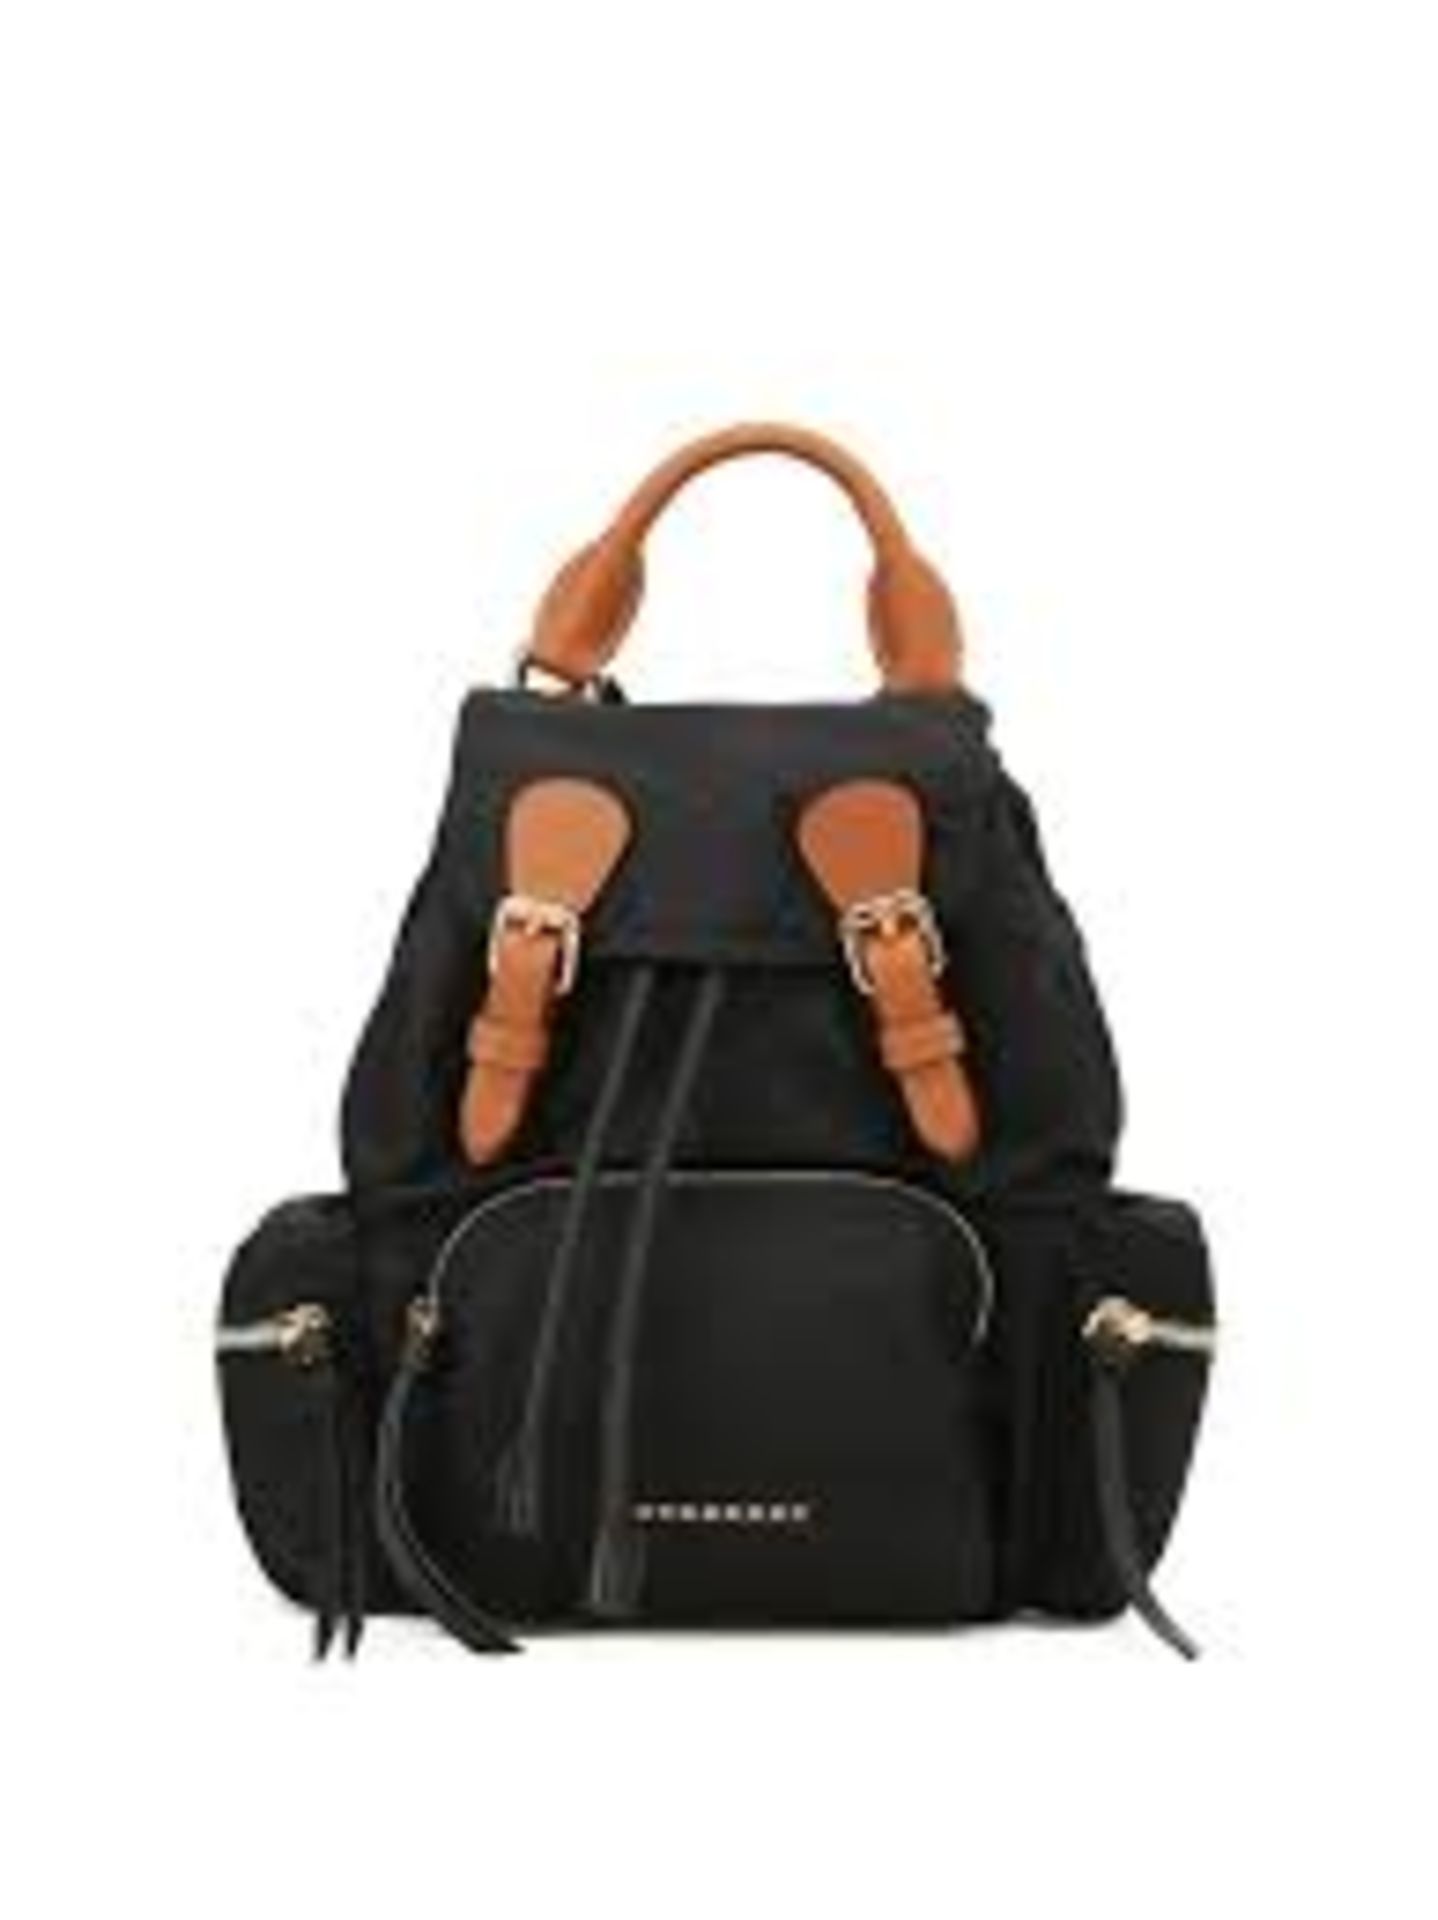 Burberry black nylon backpack. 35x35cm - Image 3 of 13